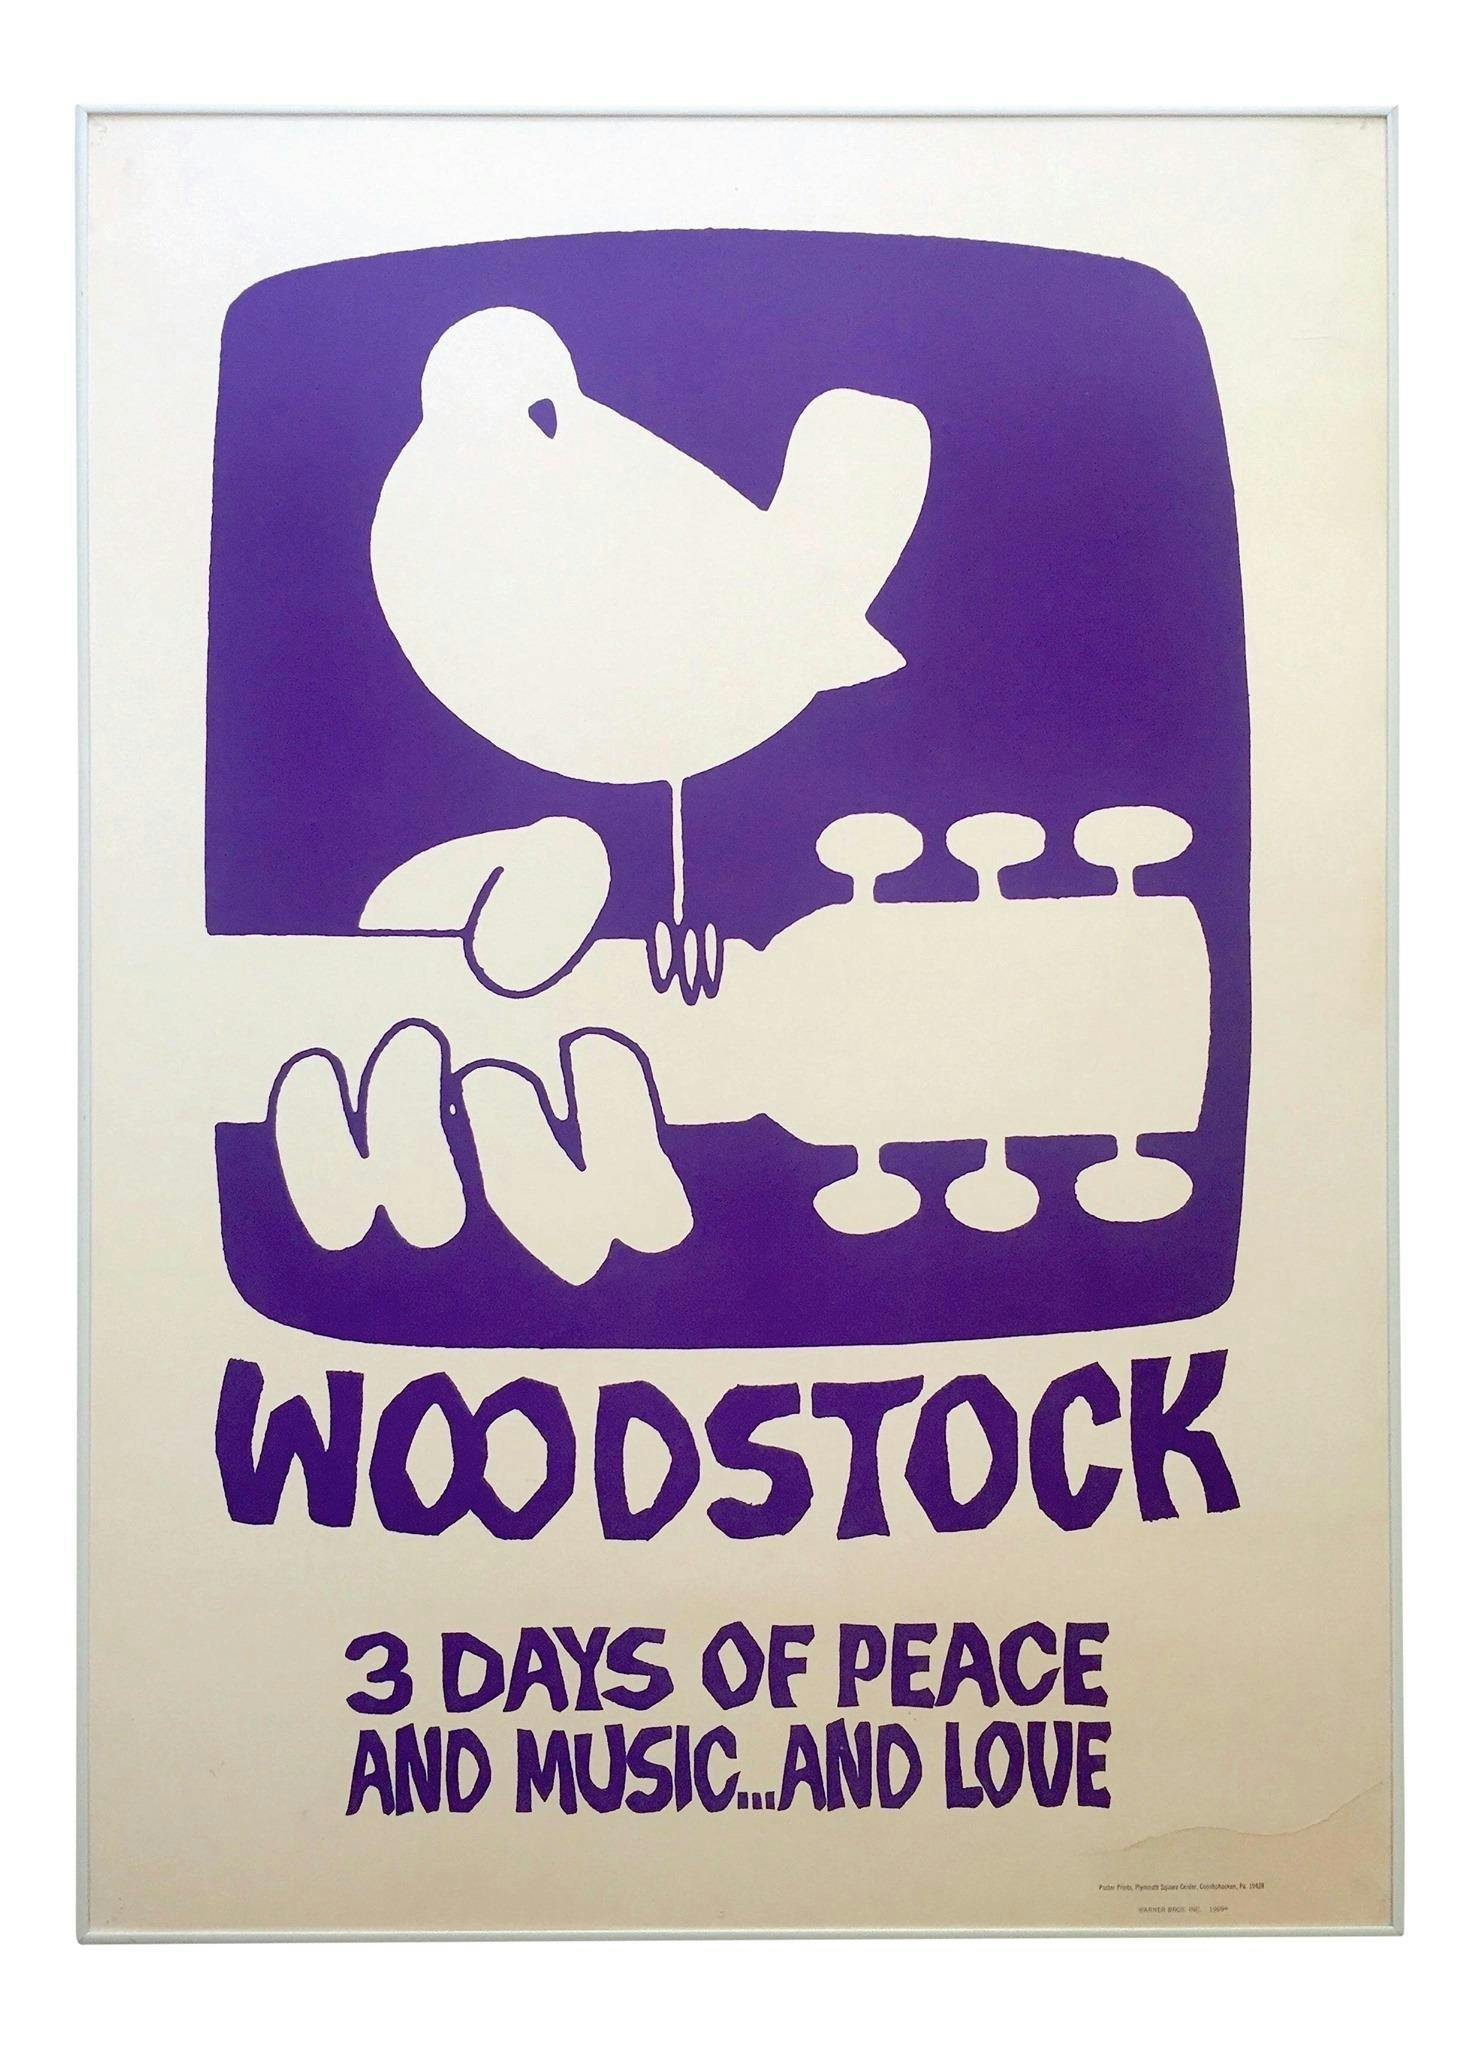 Woodstock 50 by Columbus